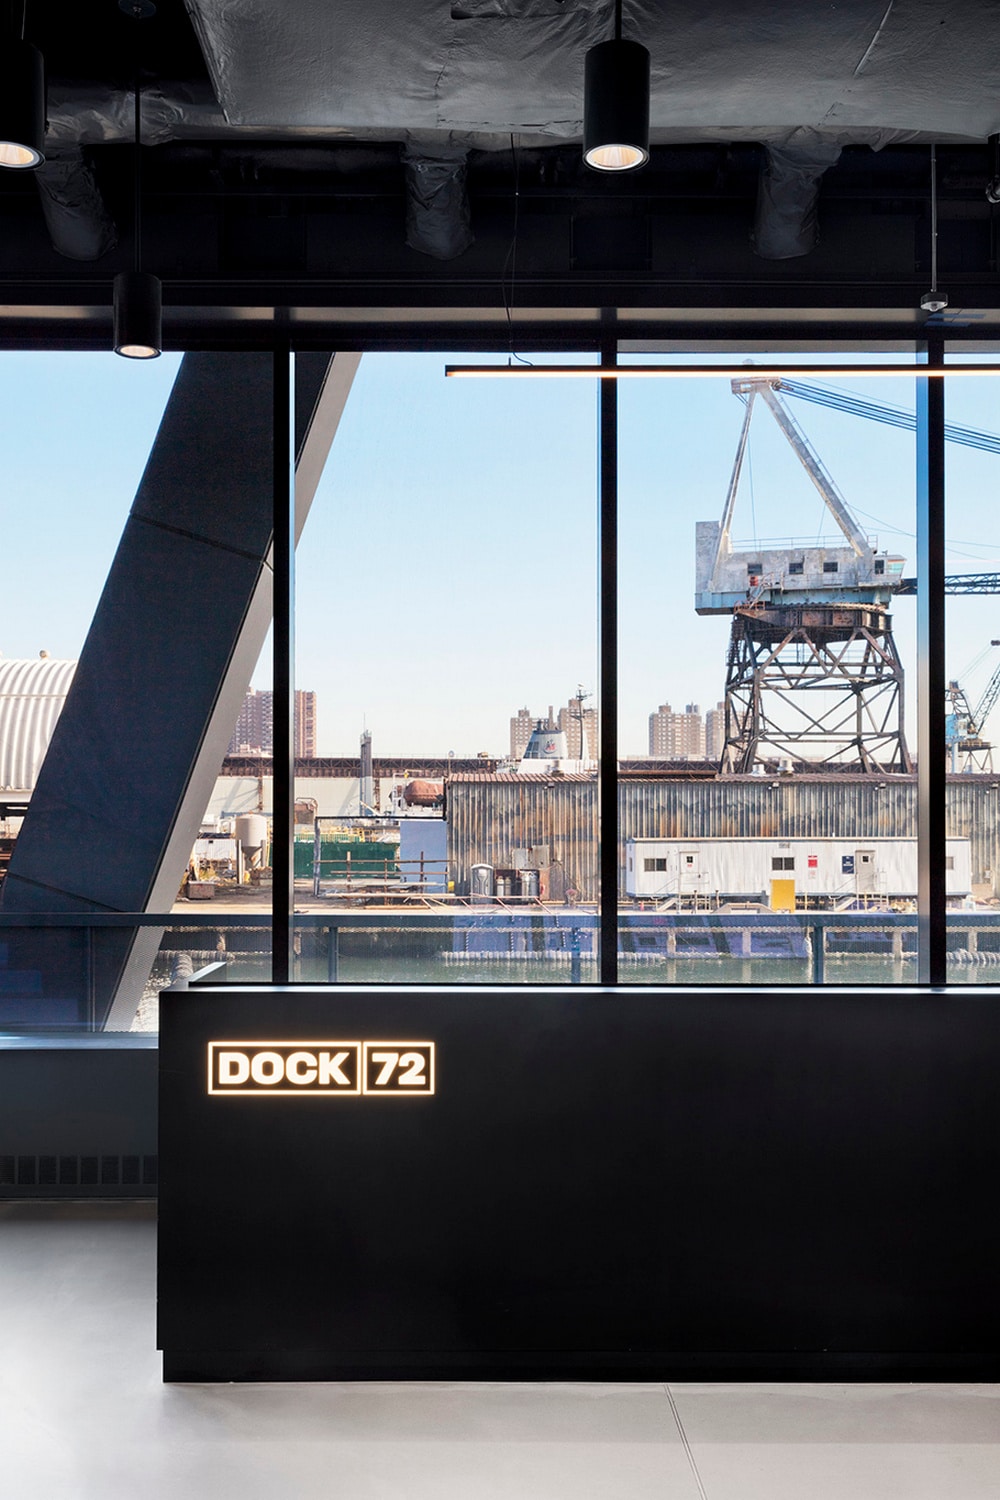 Dock 72 at Brooklyn Navy Yard